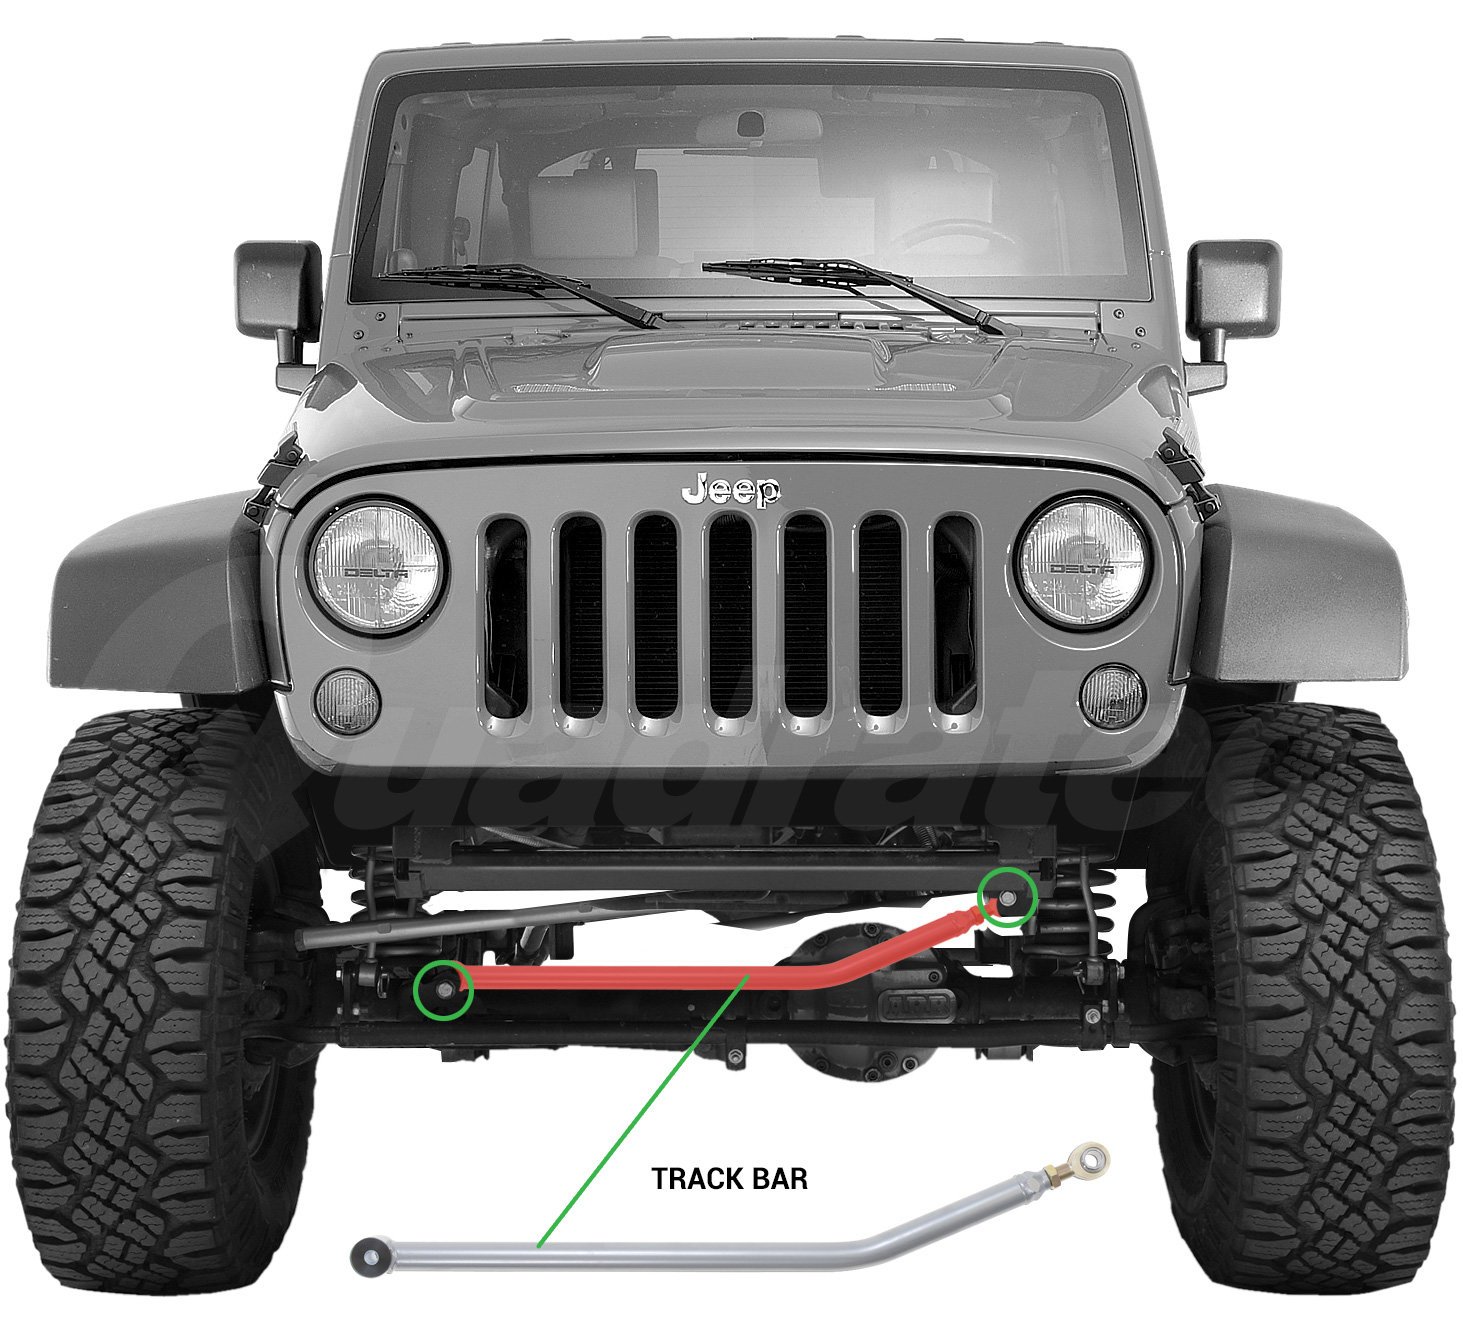 Arriba 32+ imagen track bar jeep wrangler